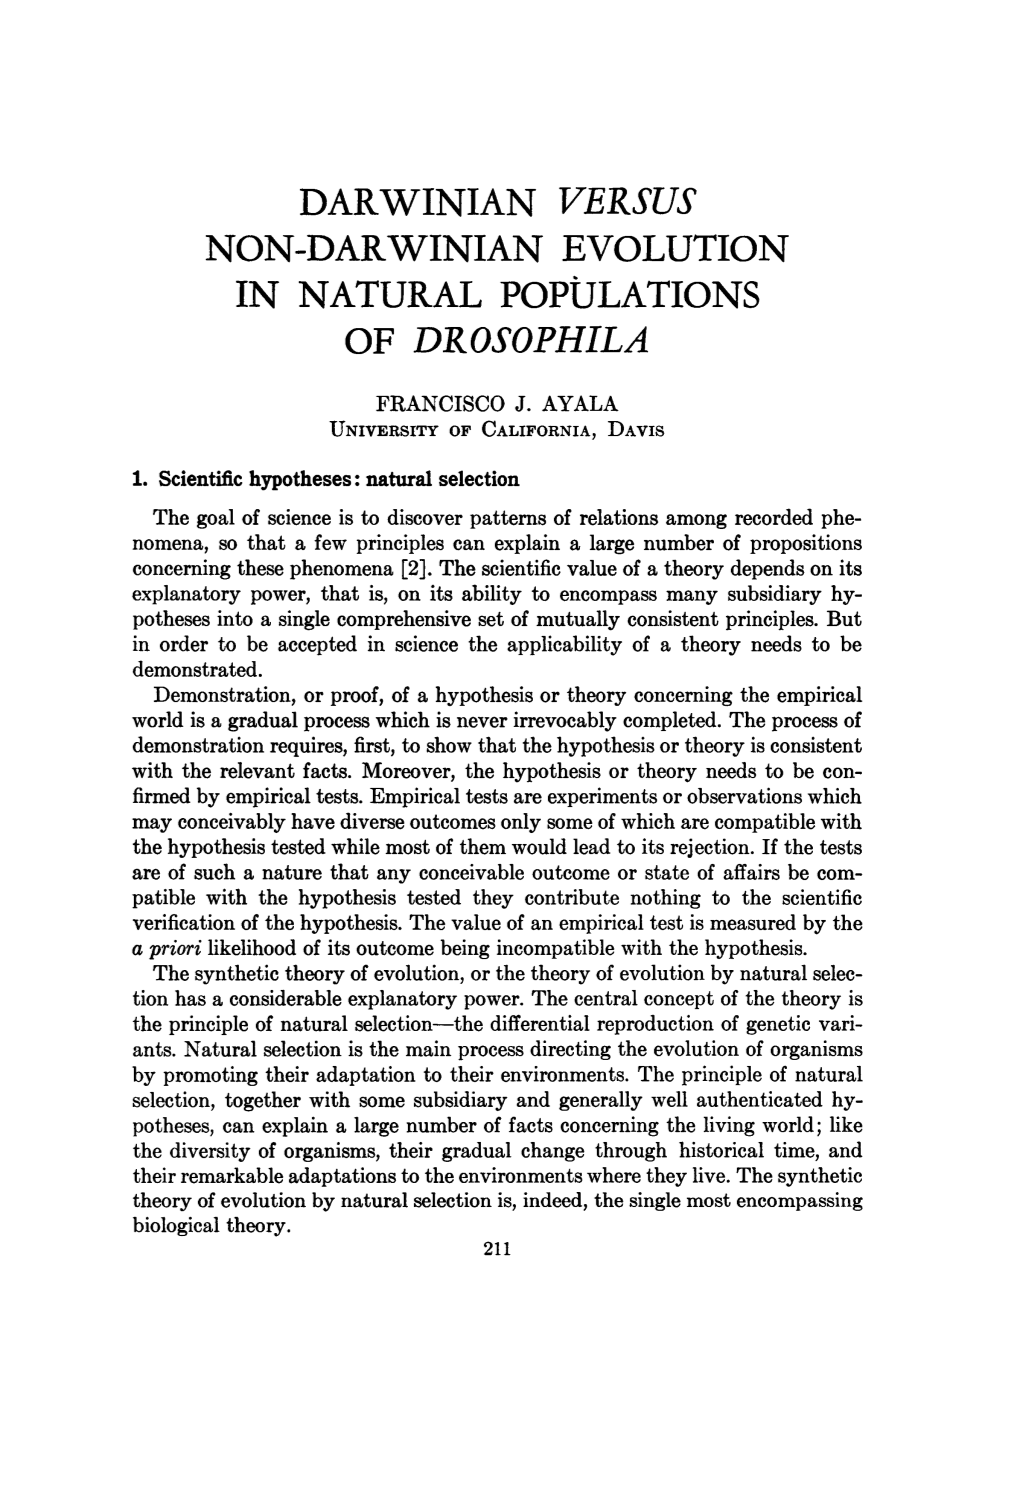 Non-Darwinian Evolution in Natural Populations of Drosophila